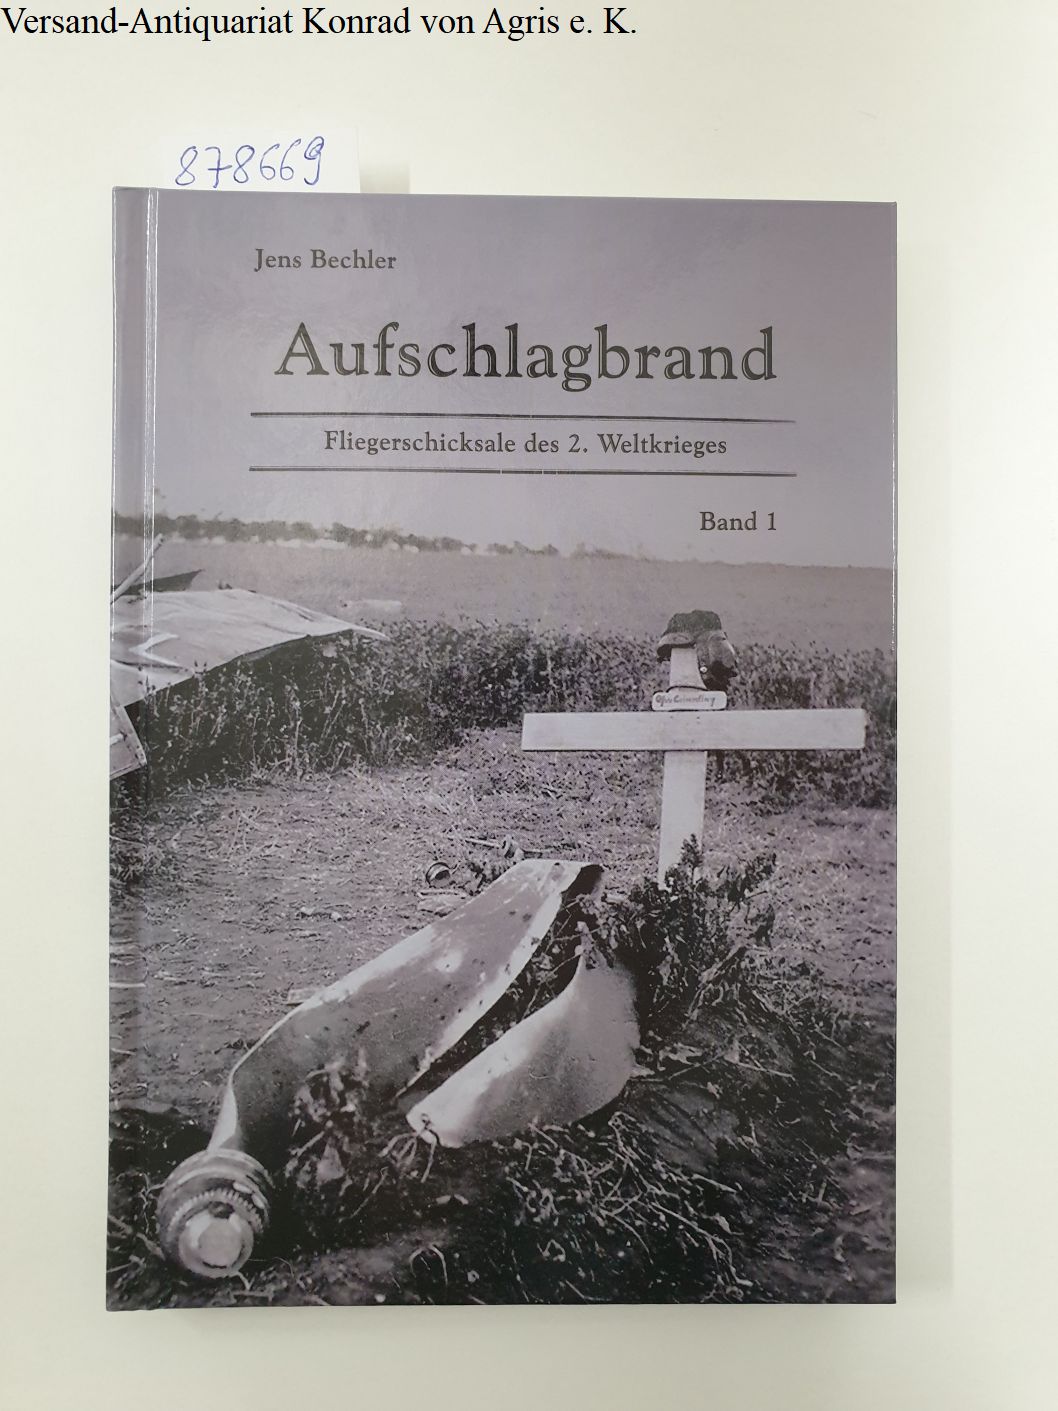 Aufschlagbrand, Band 1: Fliegerschicksale des 2. Weltkrieges - Bechler, Jens